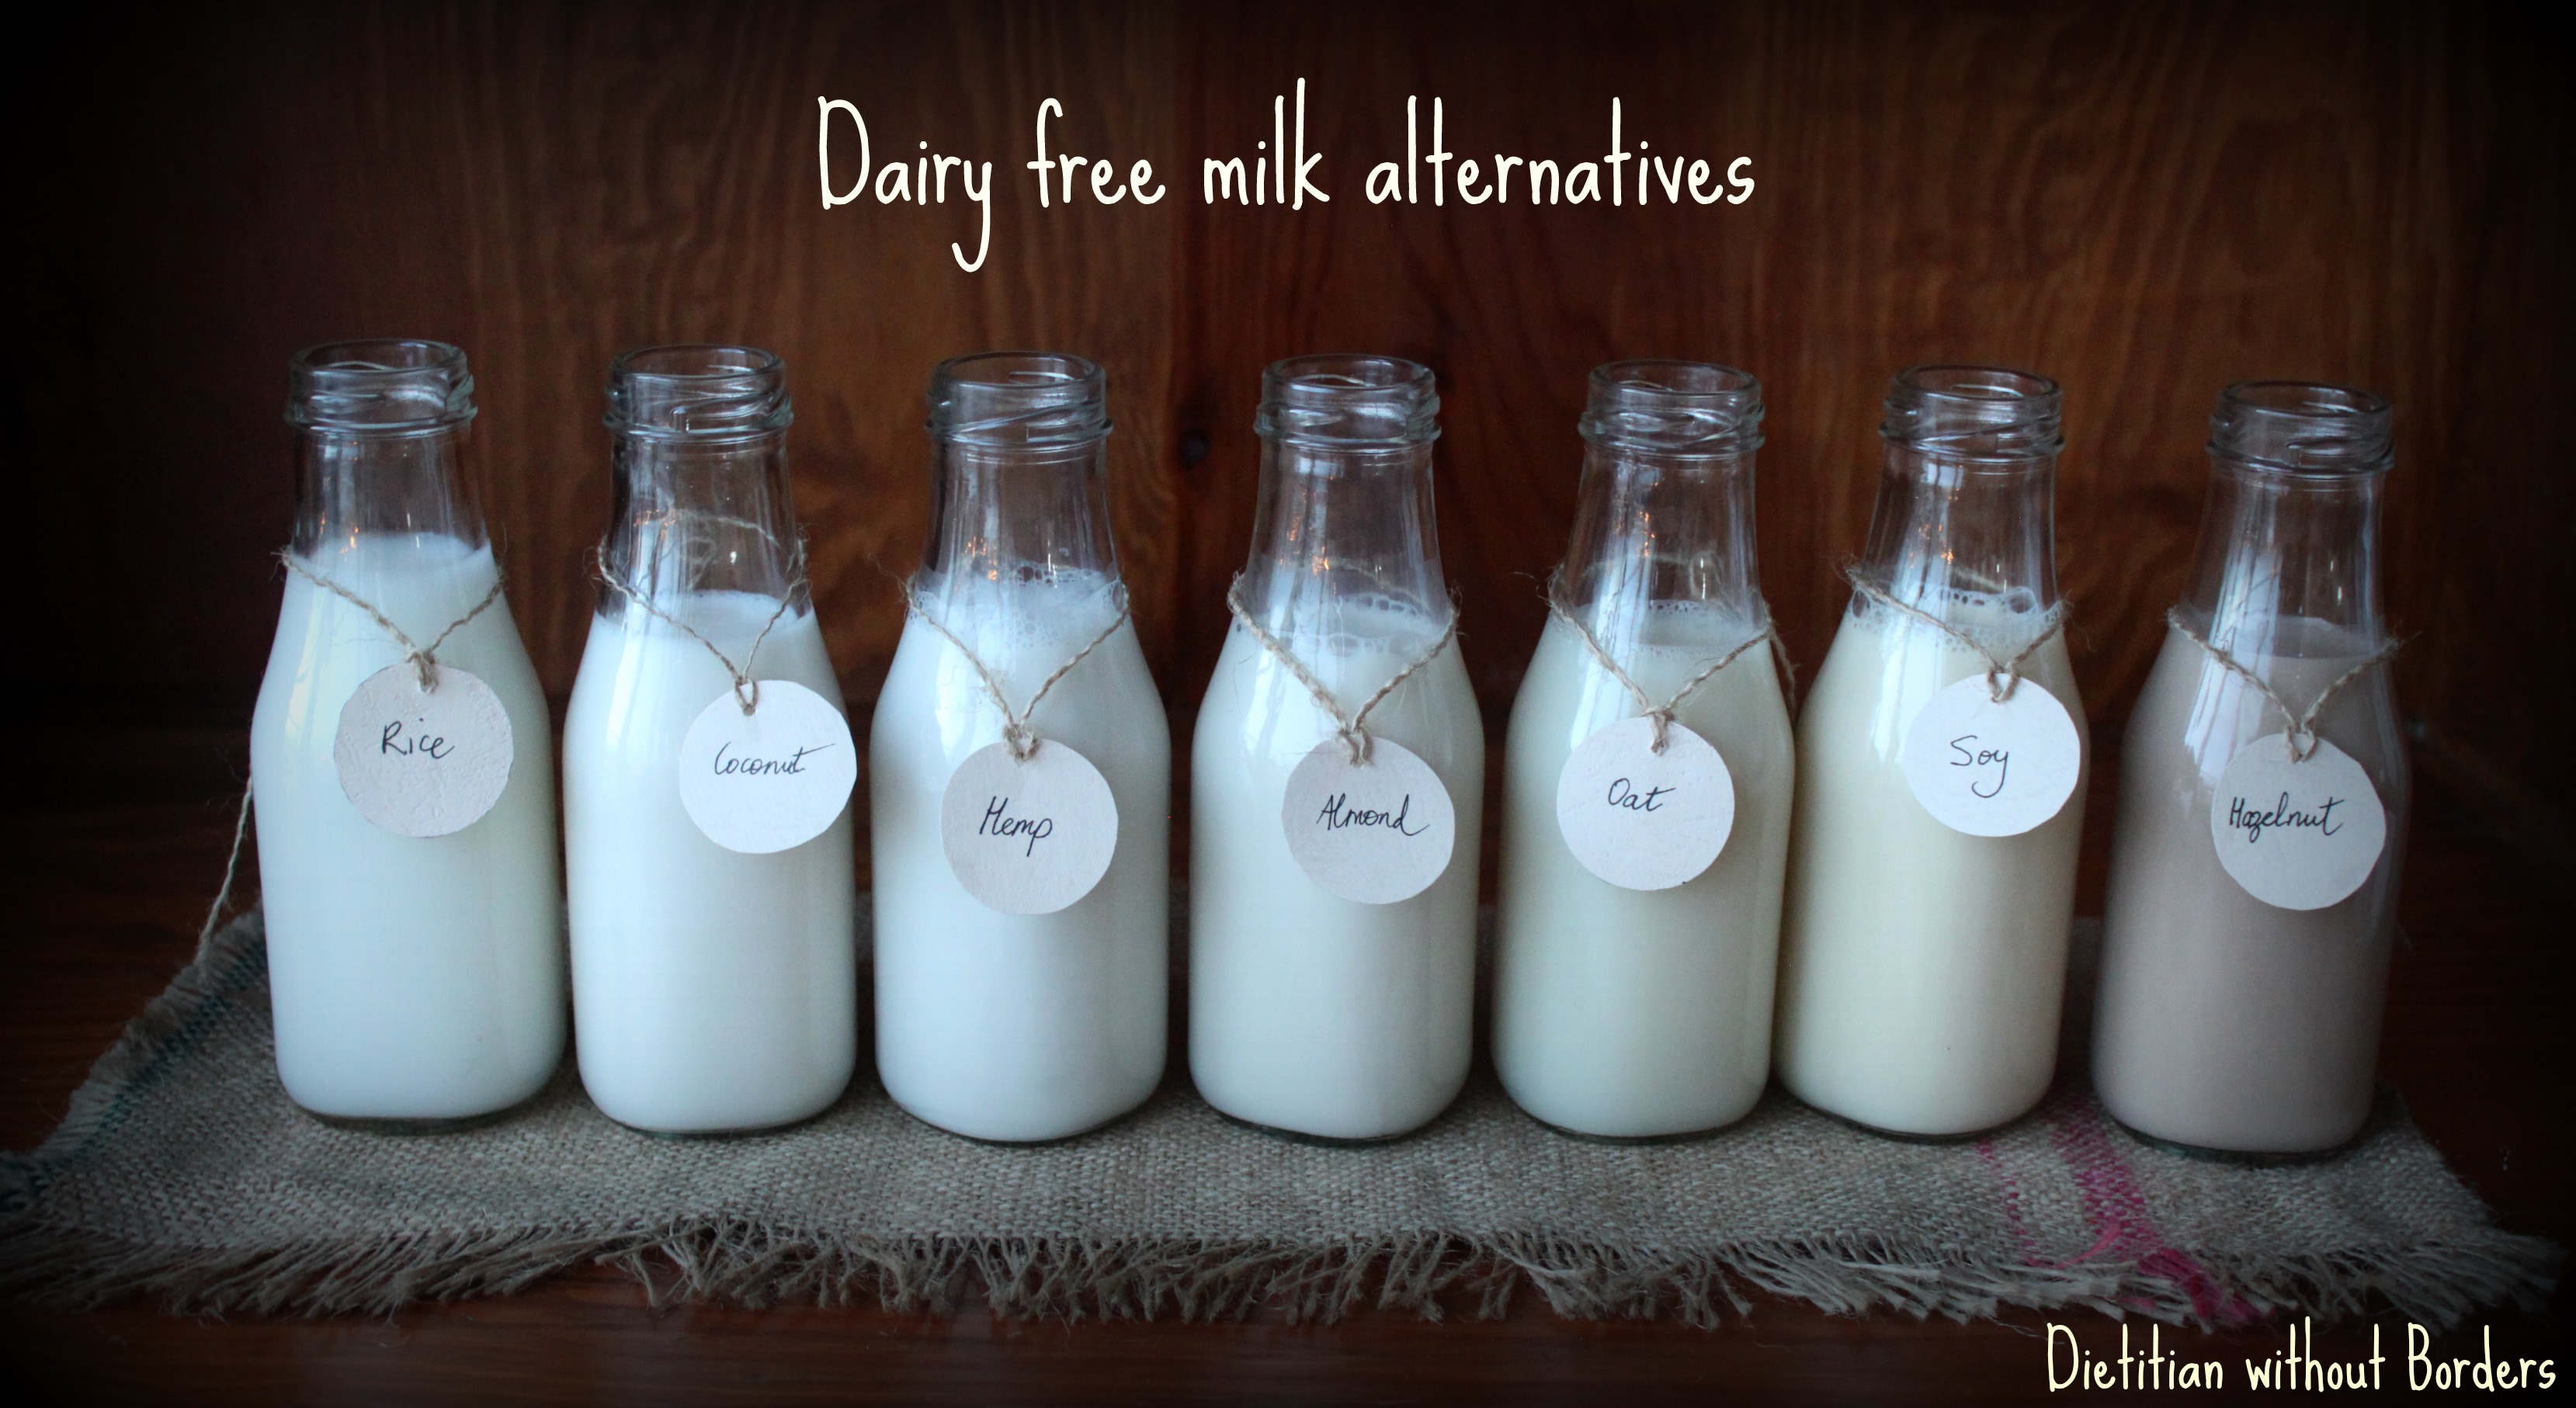 Top 4 Dairy-Free Milk Alternatives